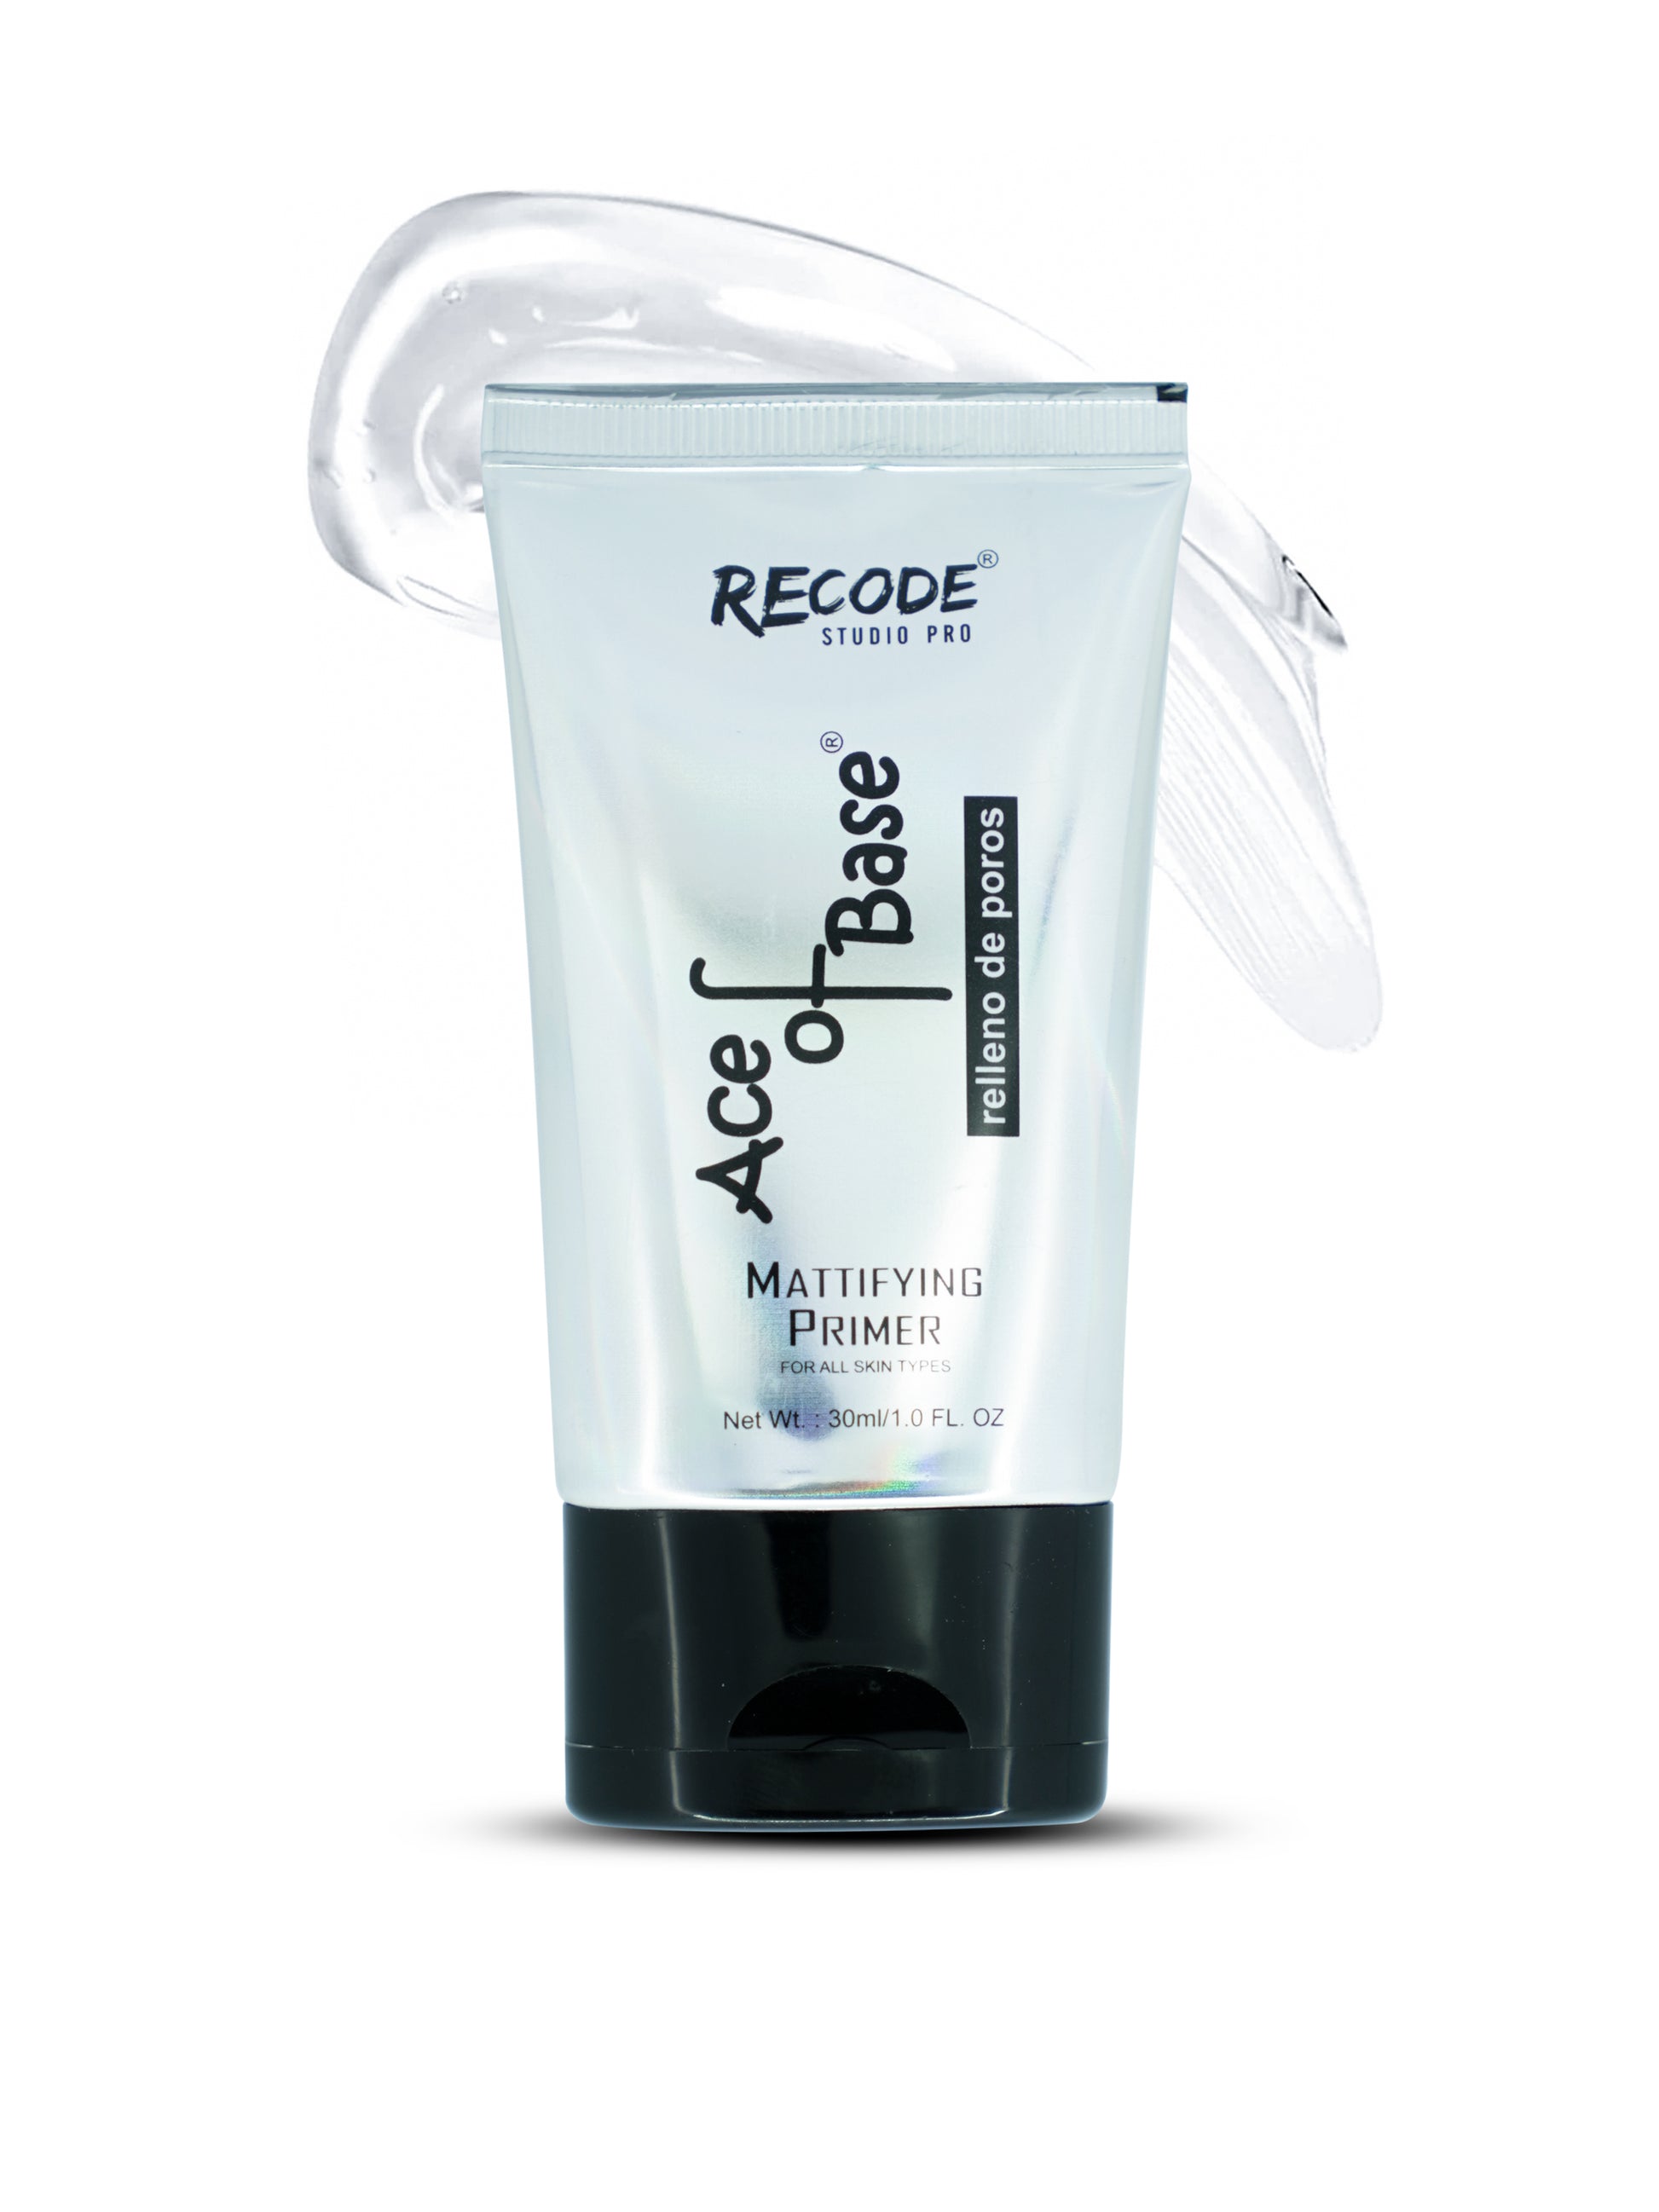 Recode Makeup Primer for Oily Skin & Dry Skin 30 ml - Ace Of Base Primer